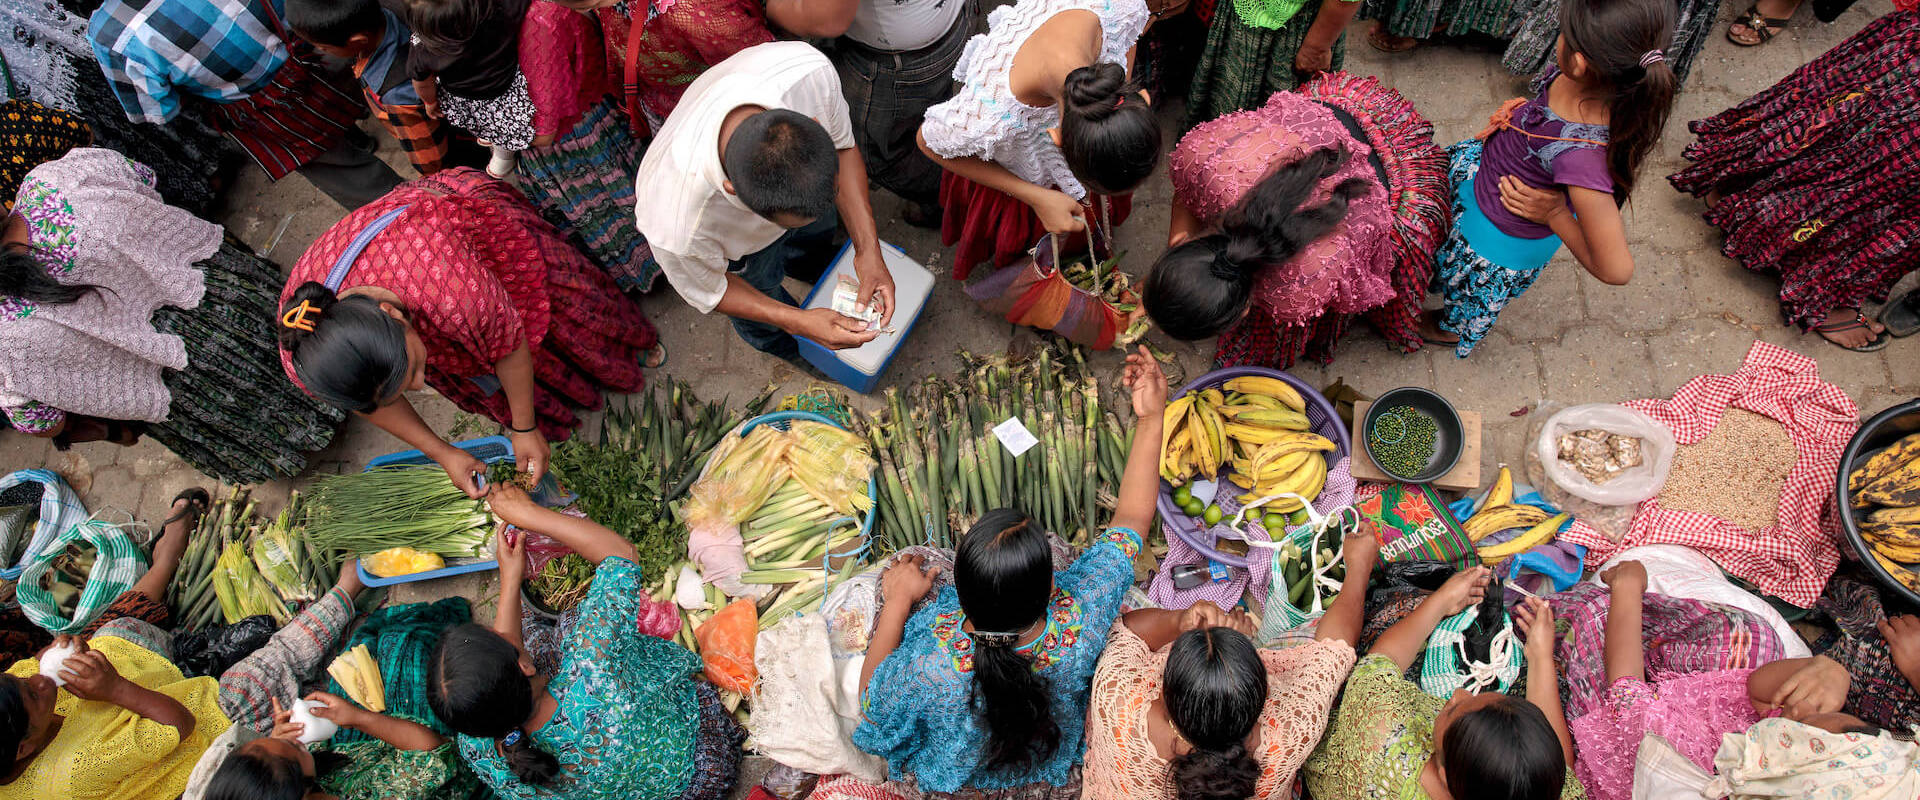 Scenes from the municipal market in Tucuru, Guatemala. Photo: UN Women/Ryan Brown